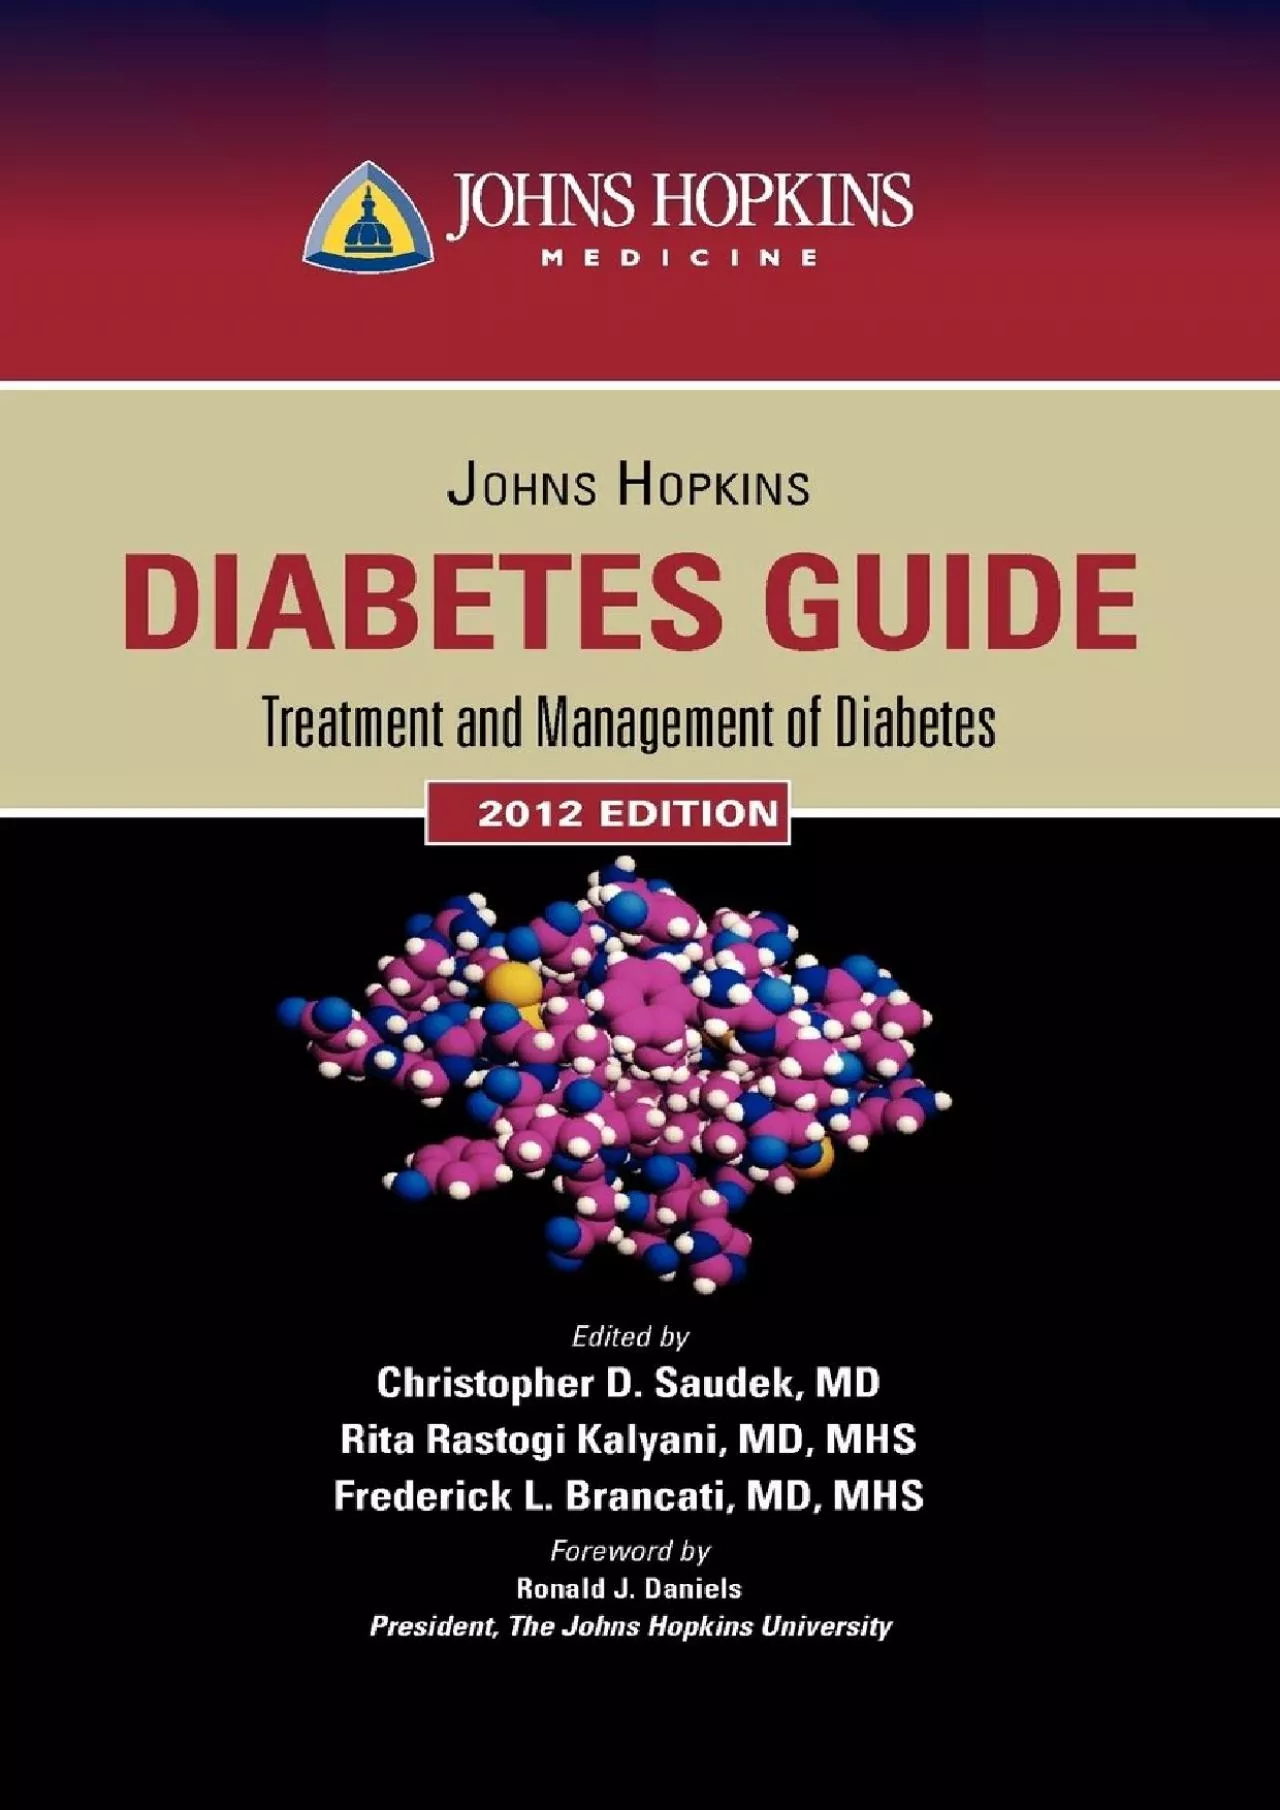 (DOWNLOAD)-Johns Hopkins Diabetes Guide 2012: Treatment and Management of Diabetes